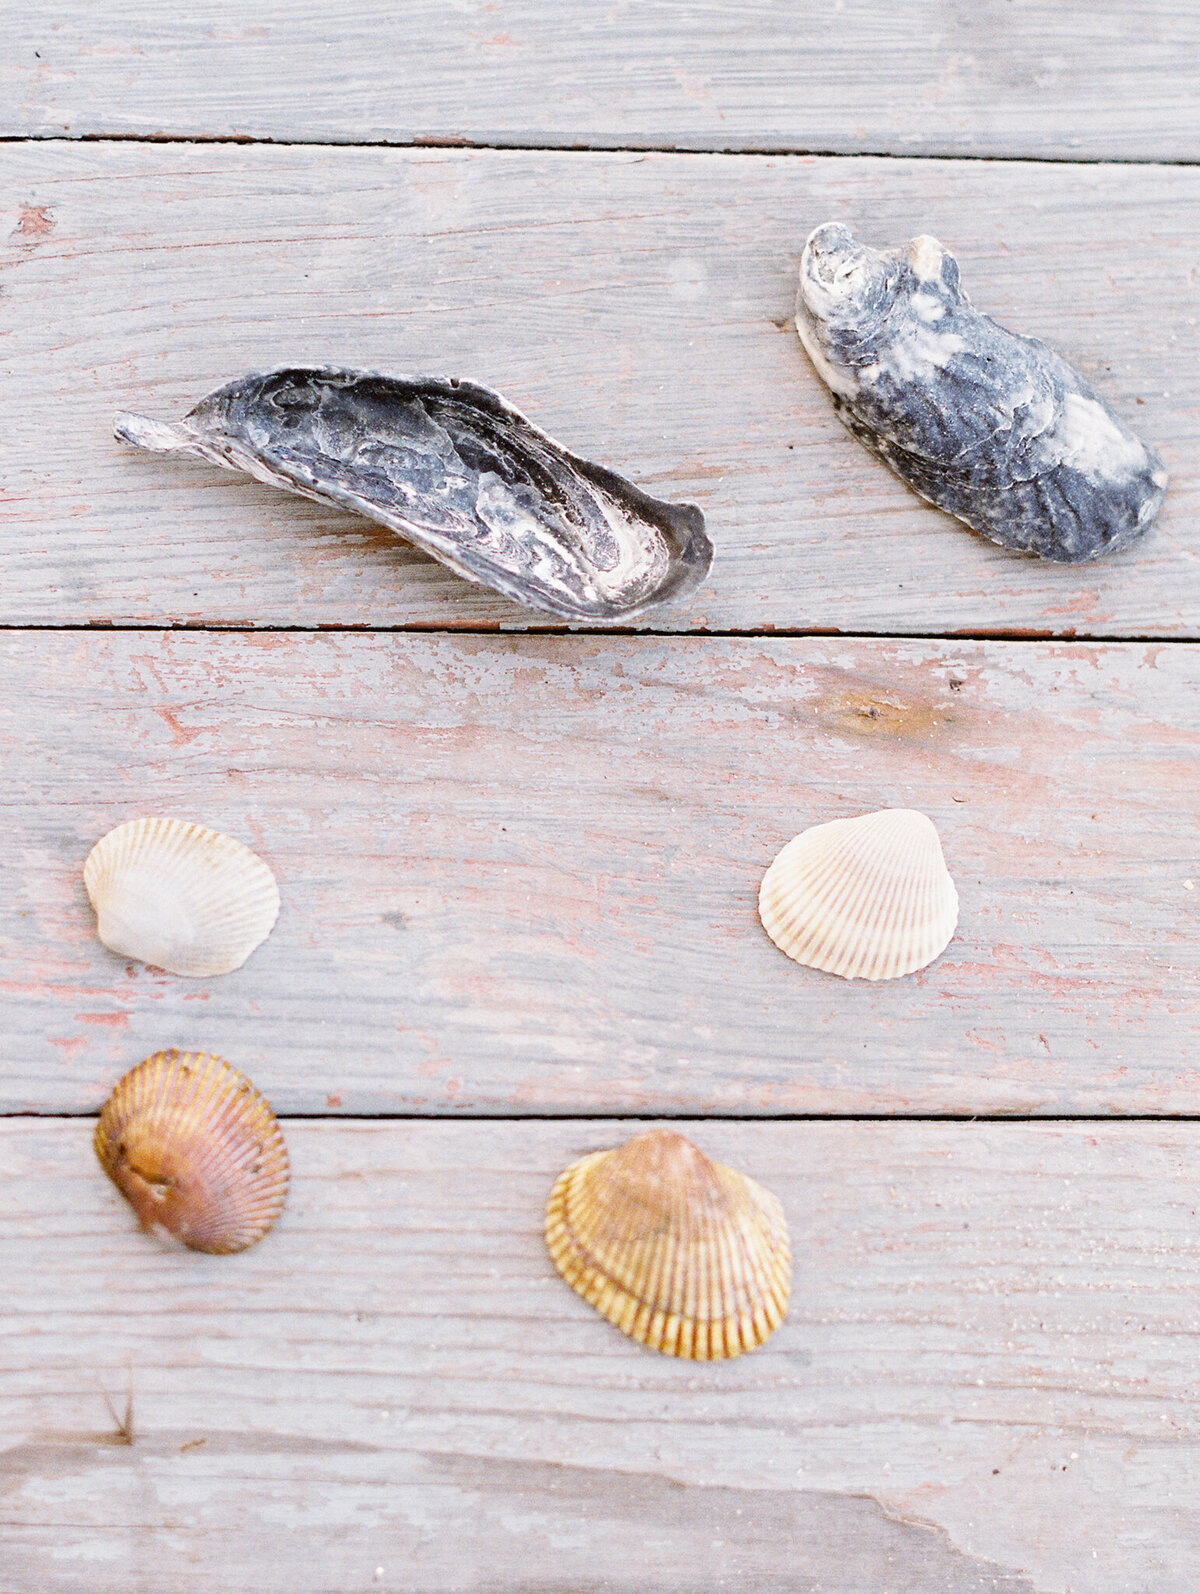 North Carolina beach shells